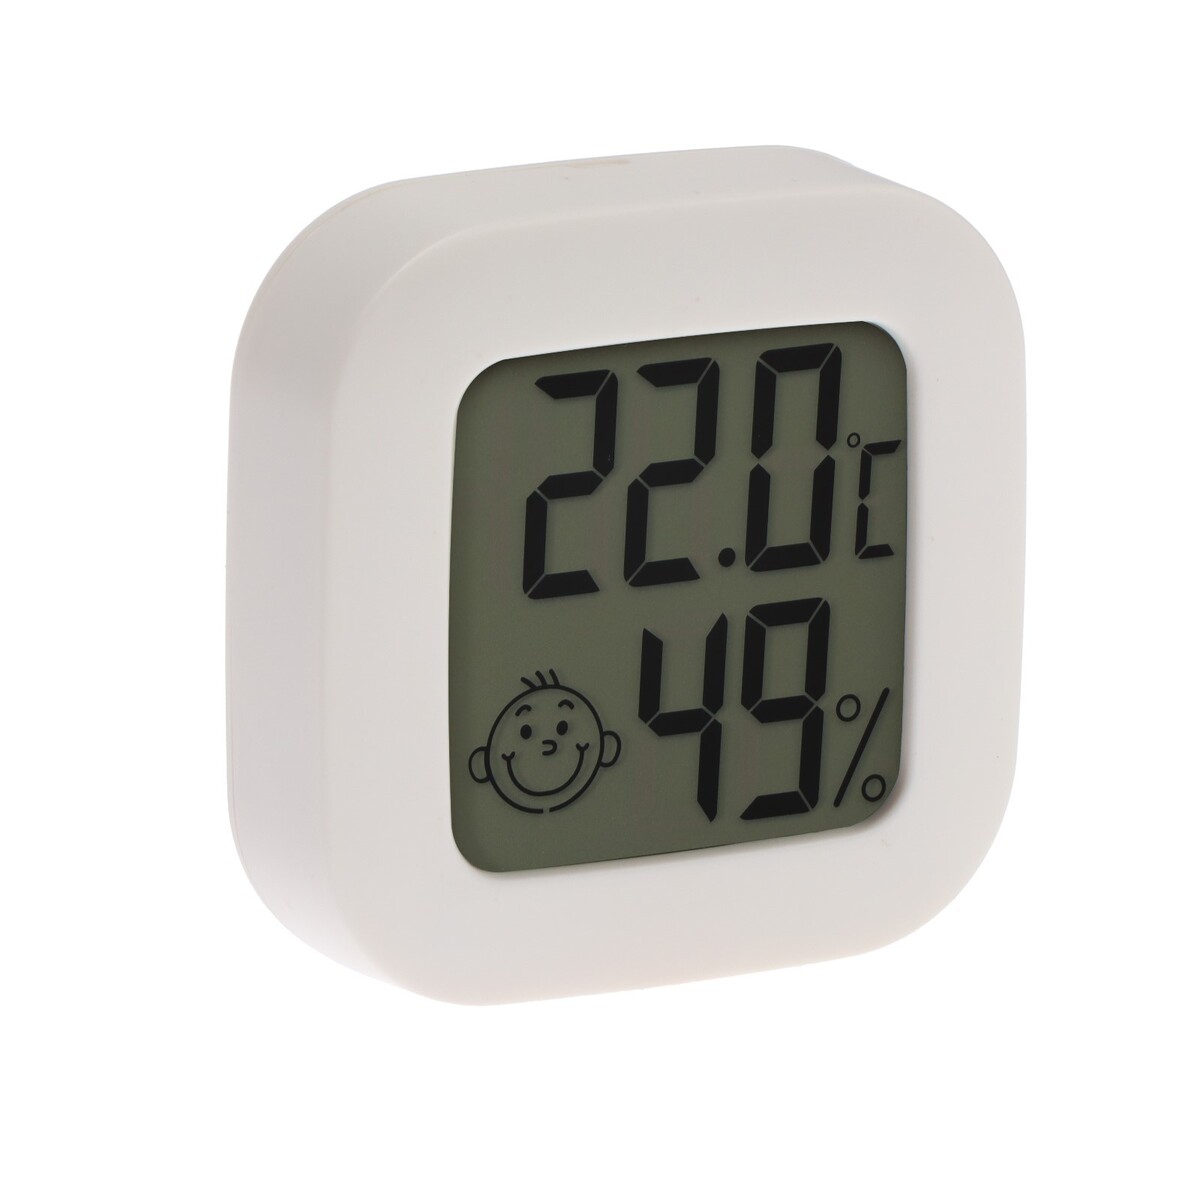 Термометр электронный ltr-08, датчик температуры, датчик влажности, белый супер плюс ион авто электронный ионизатор воздуха